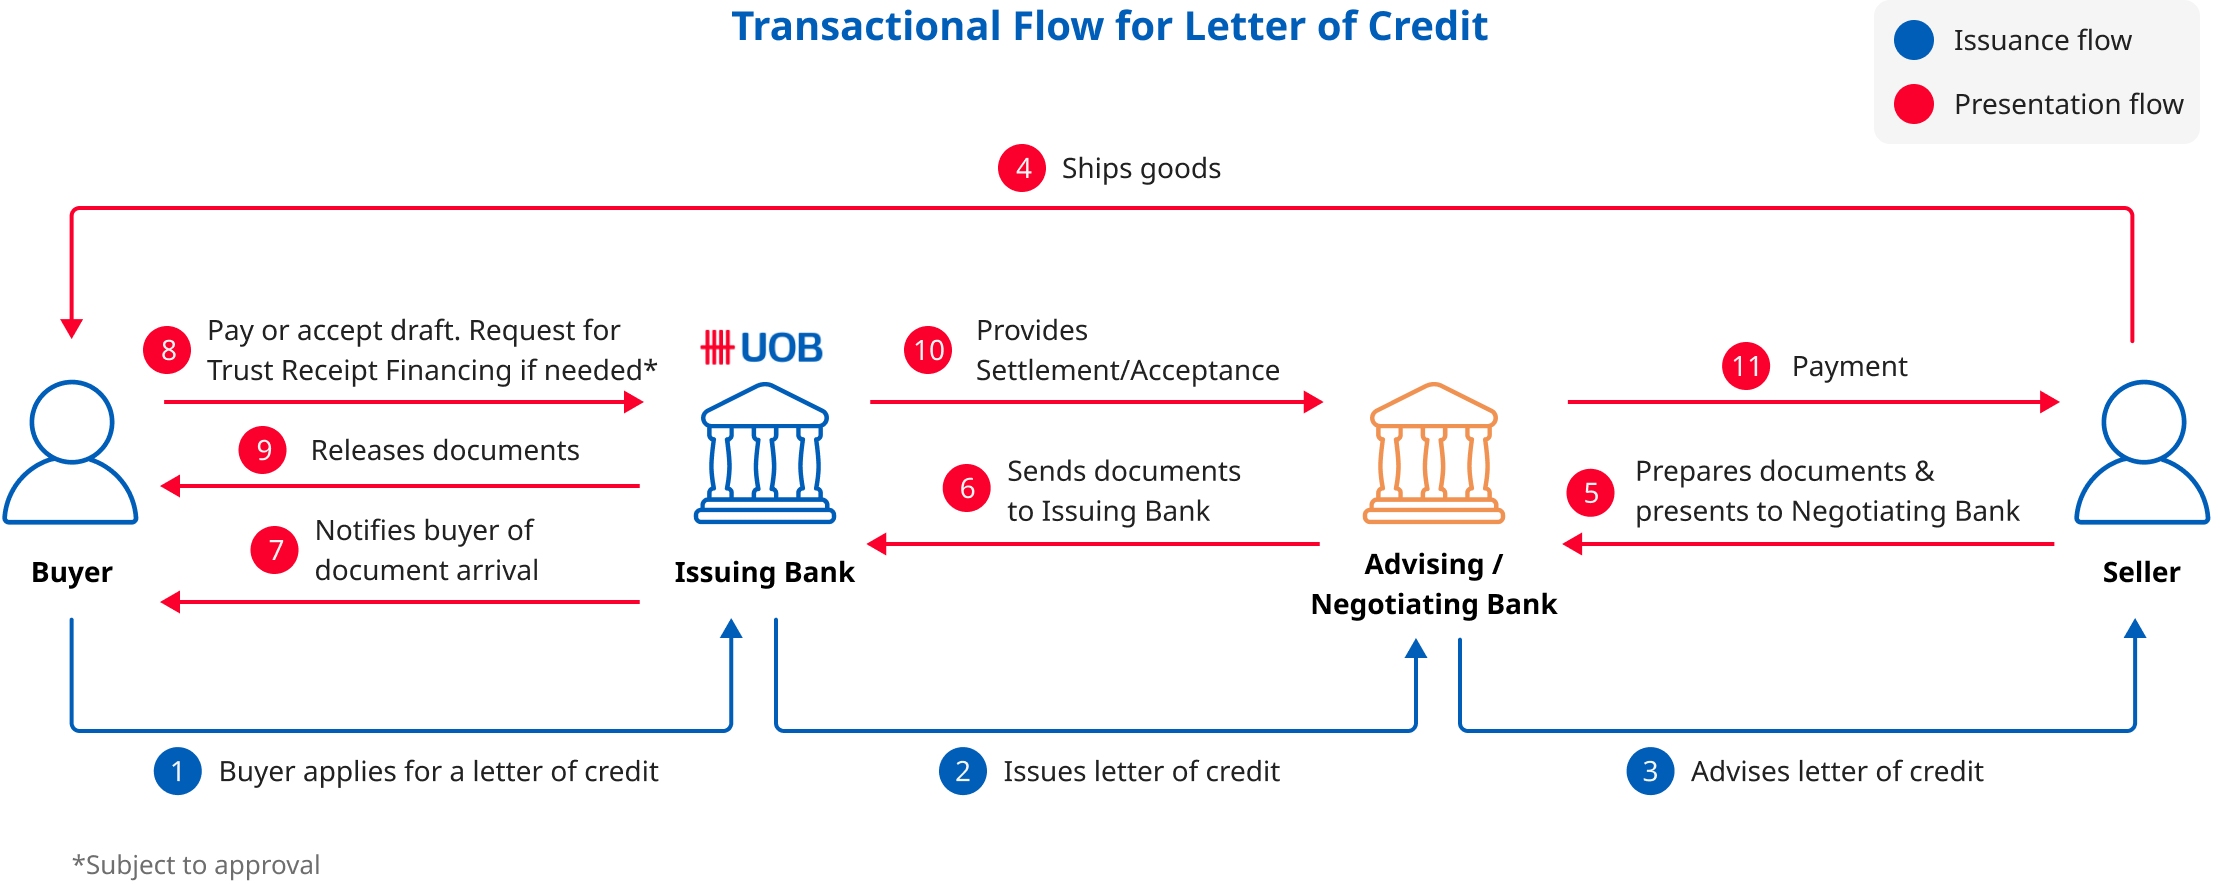 Transactional Flow for Letter of Credit